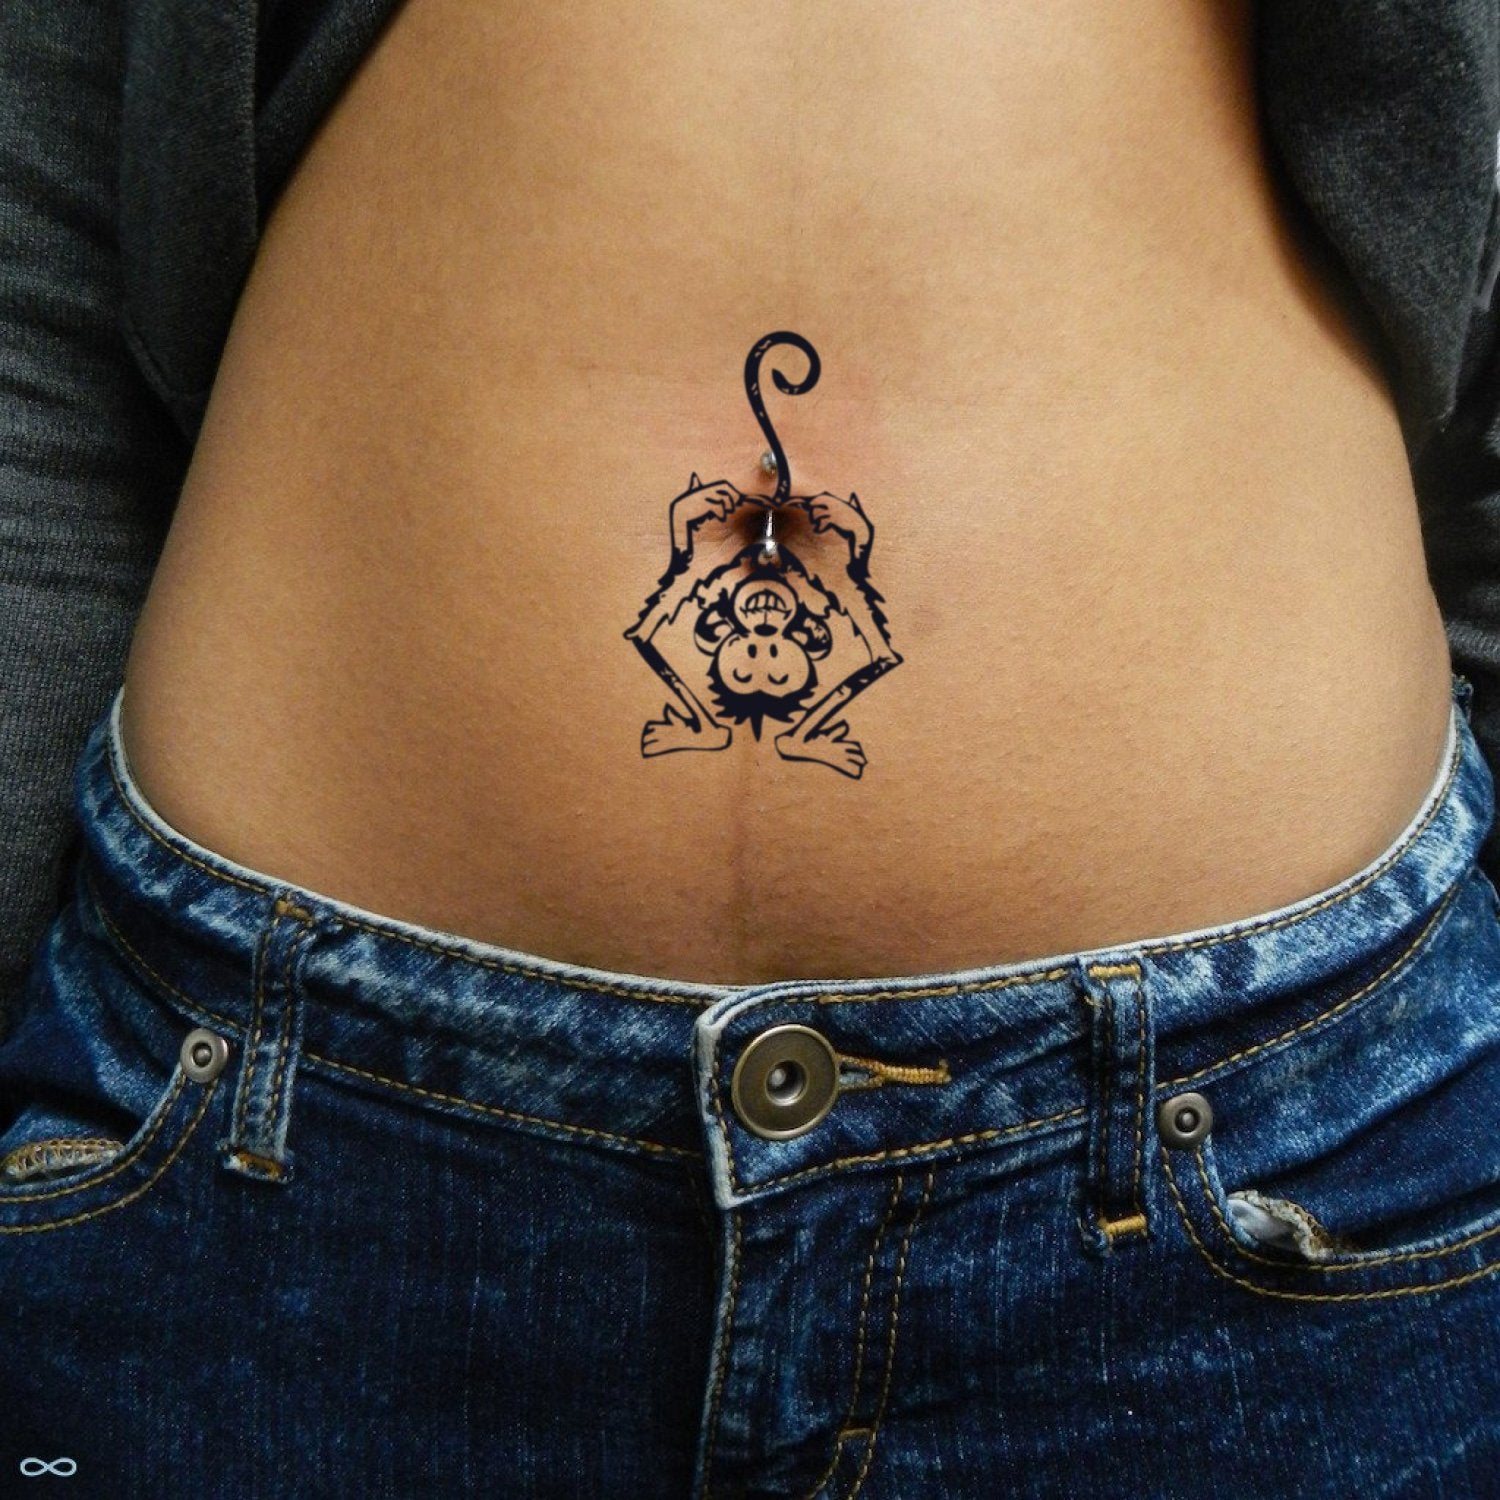 11 Of The Best Underboob Tattoo Ideas For Women | YourTango